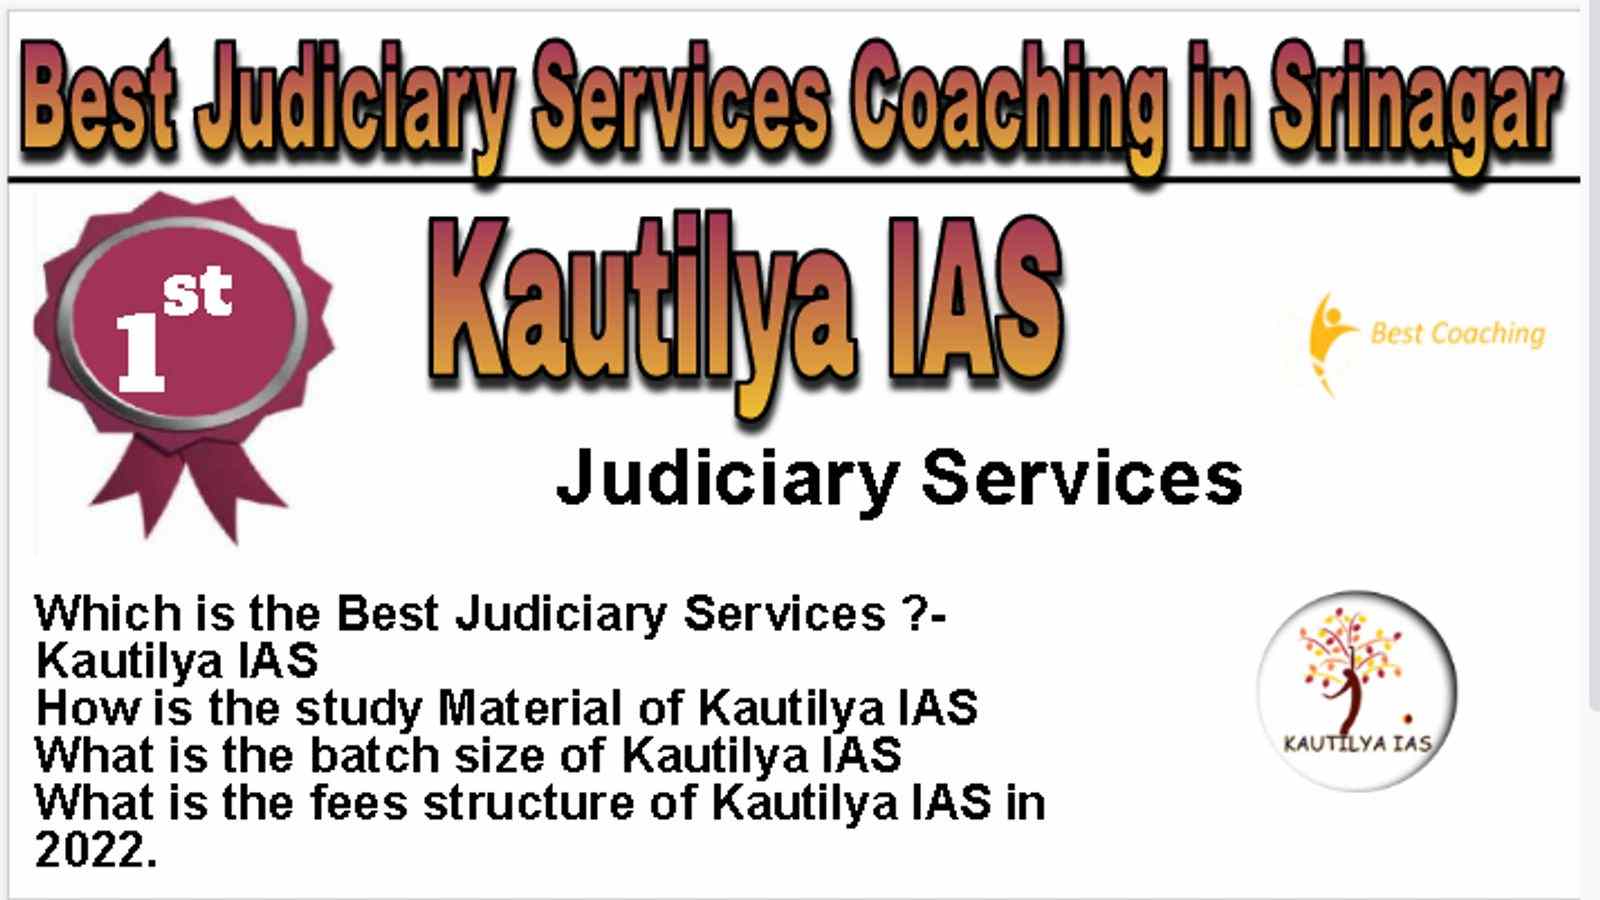 Rank 1 Best Judiciary Services Coaching in Srinagar